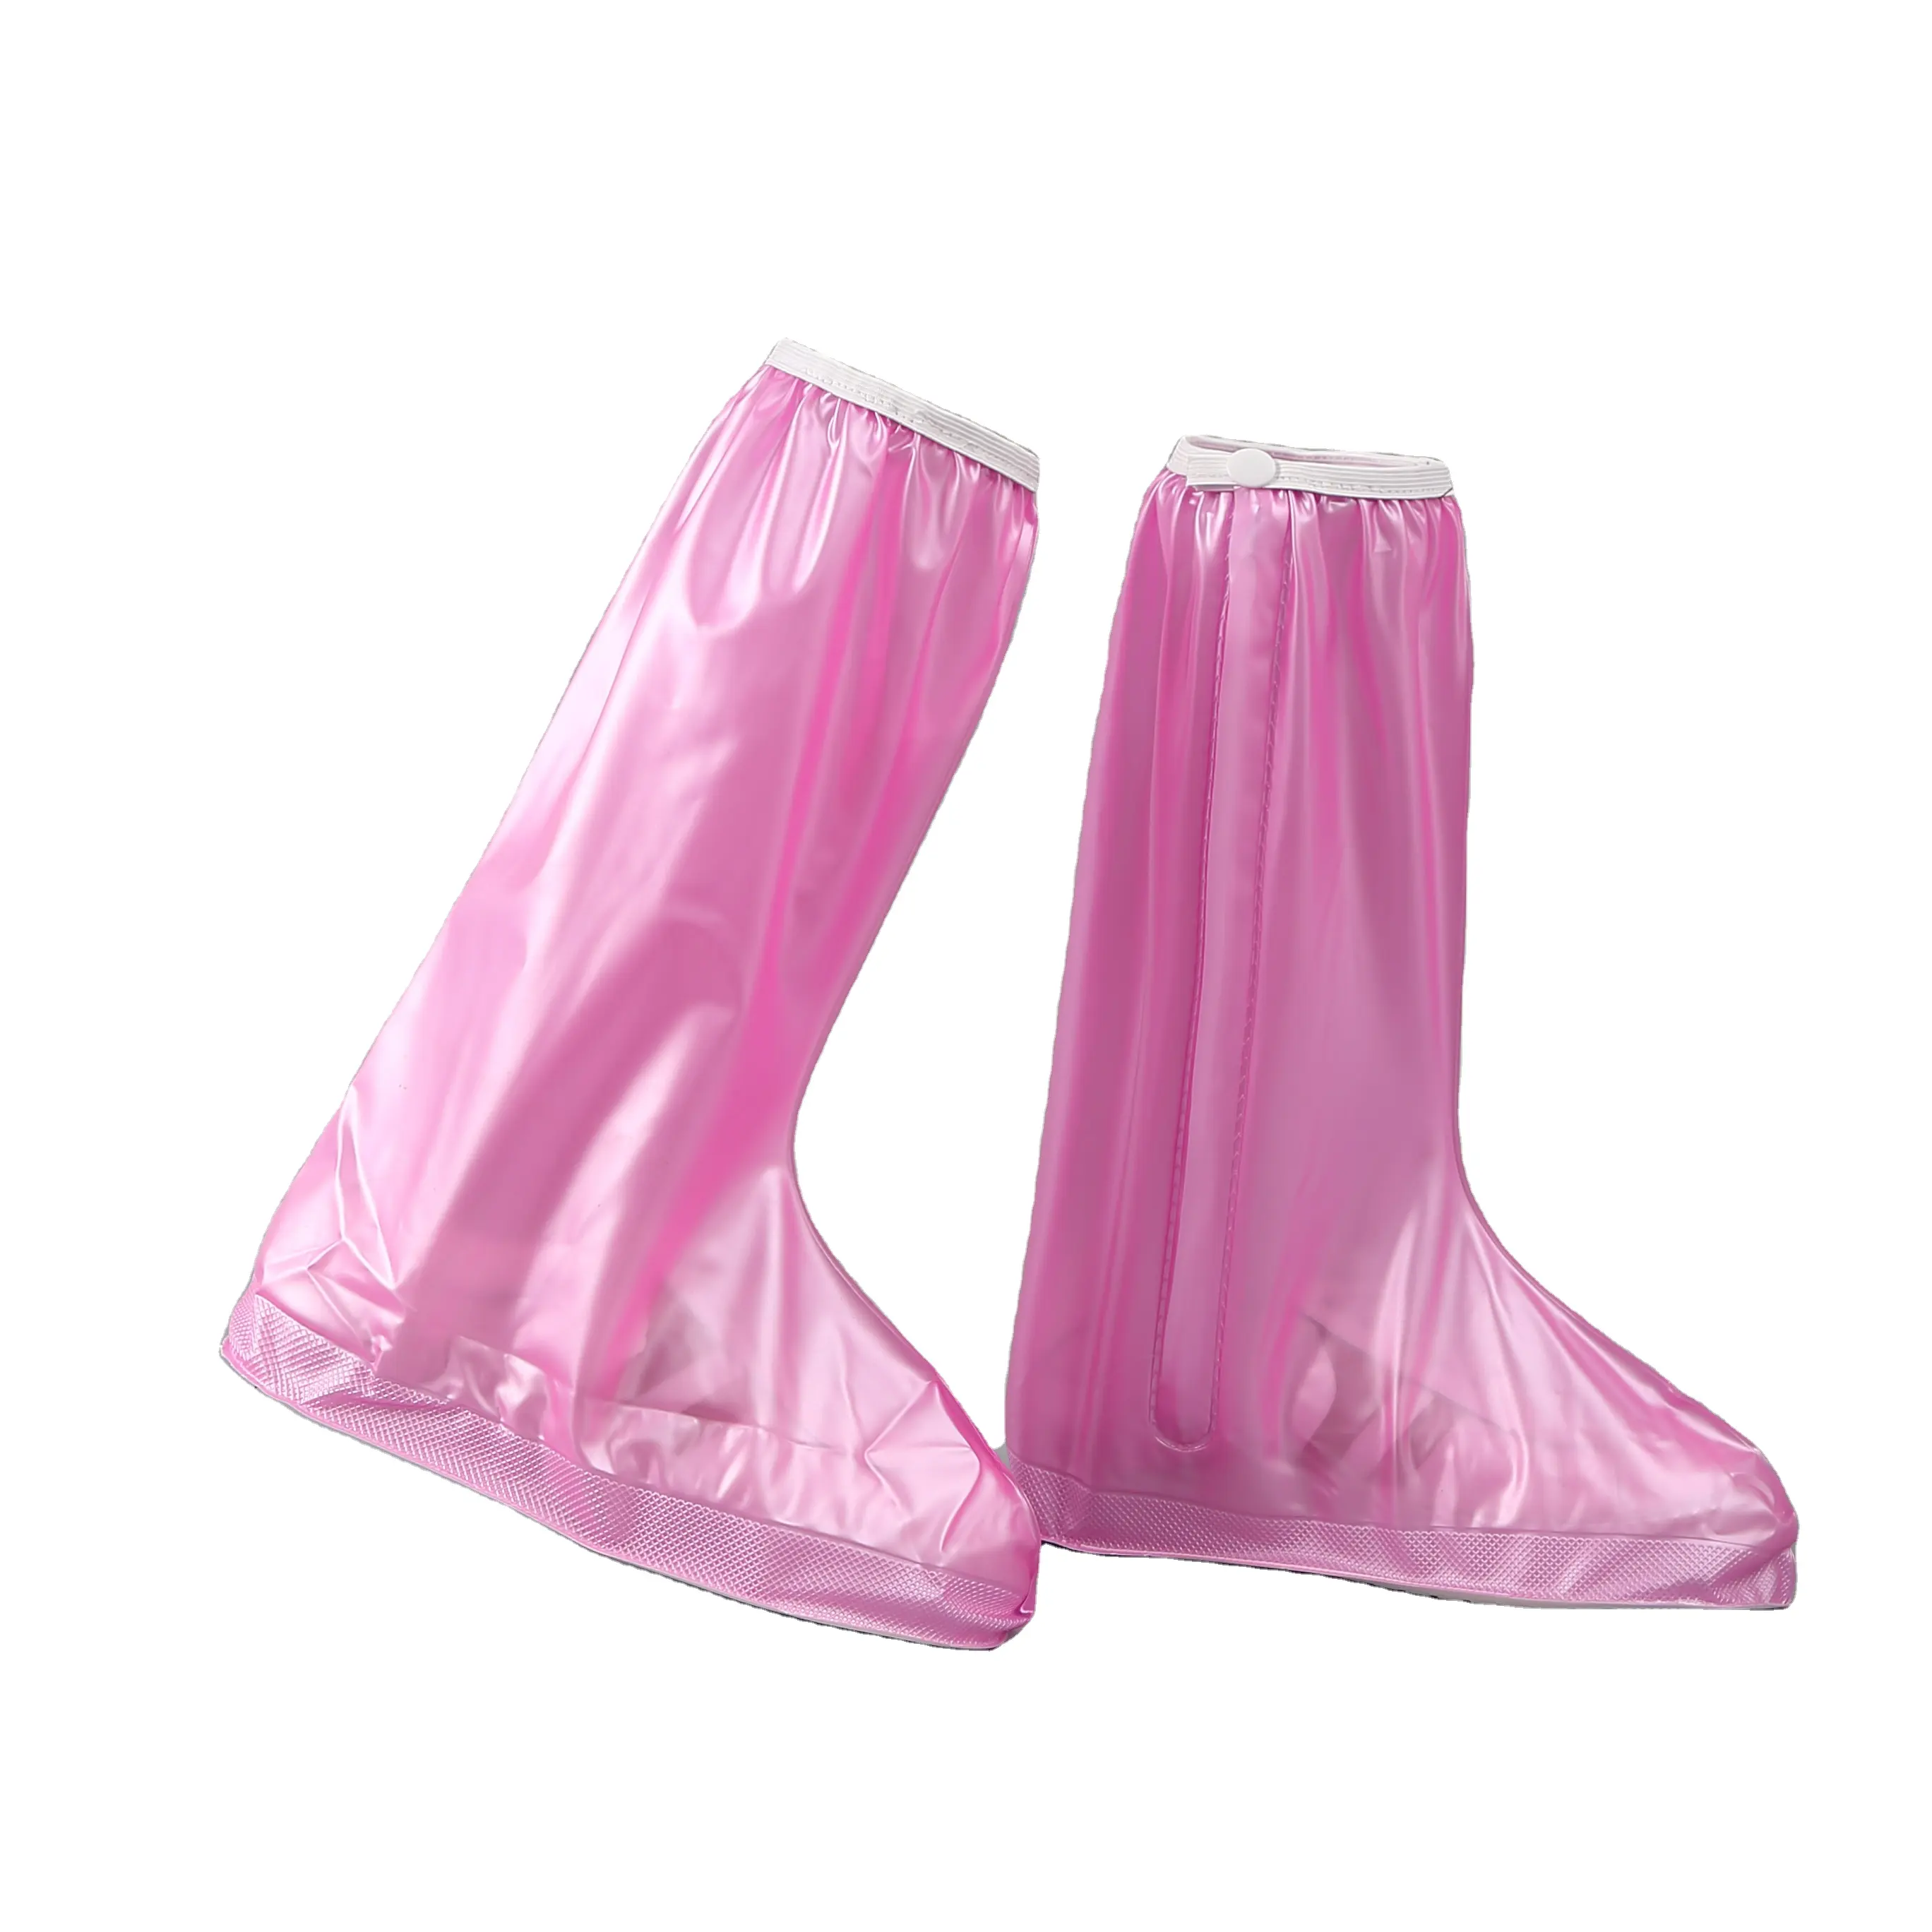 Бахилы на обувь ПВХ от воды и грязи LVR 819A S 35-36 25.5 см (Pink) (16176)